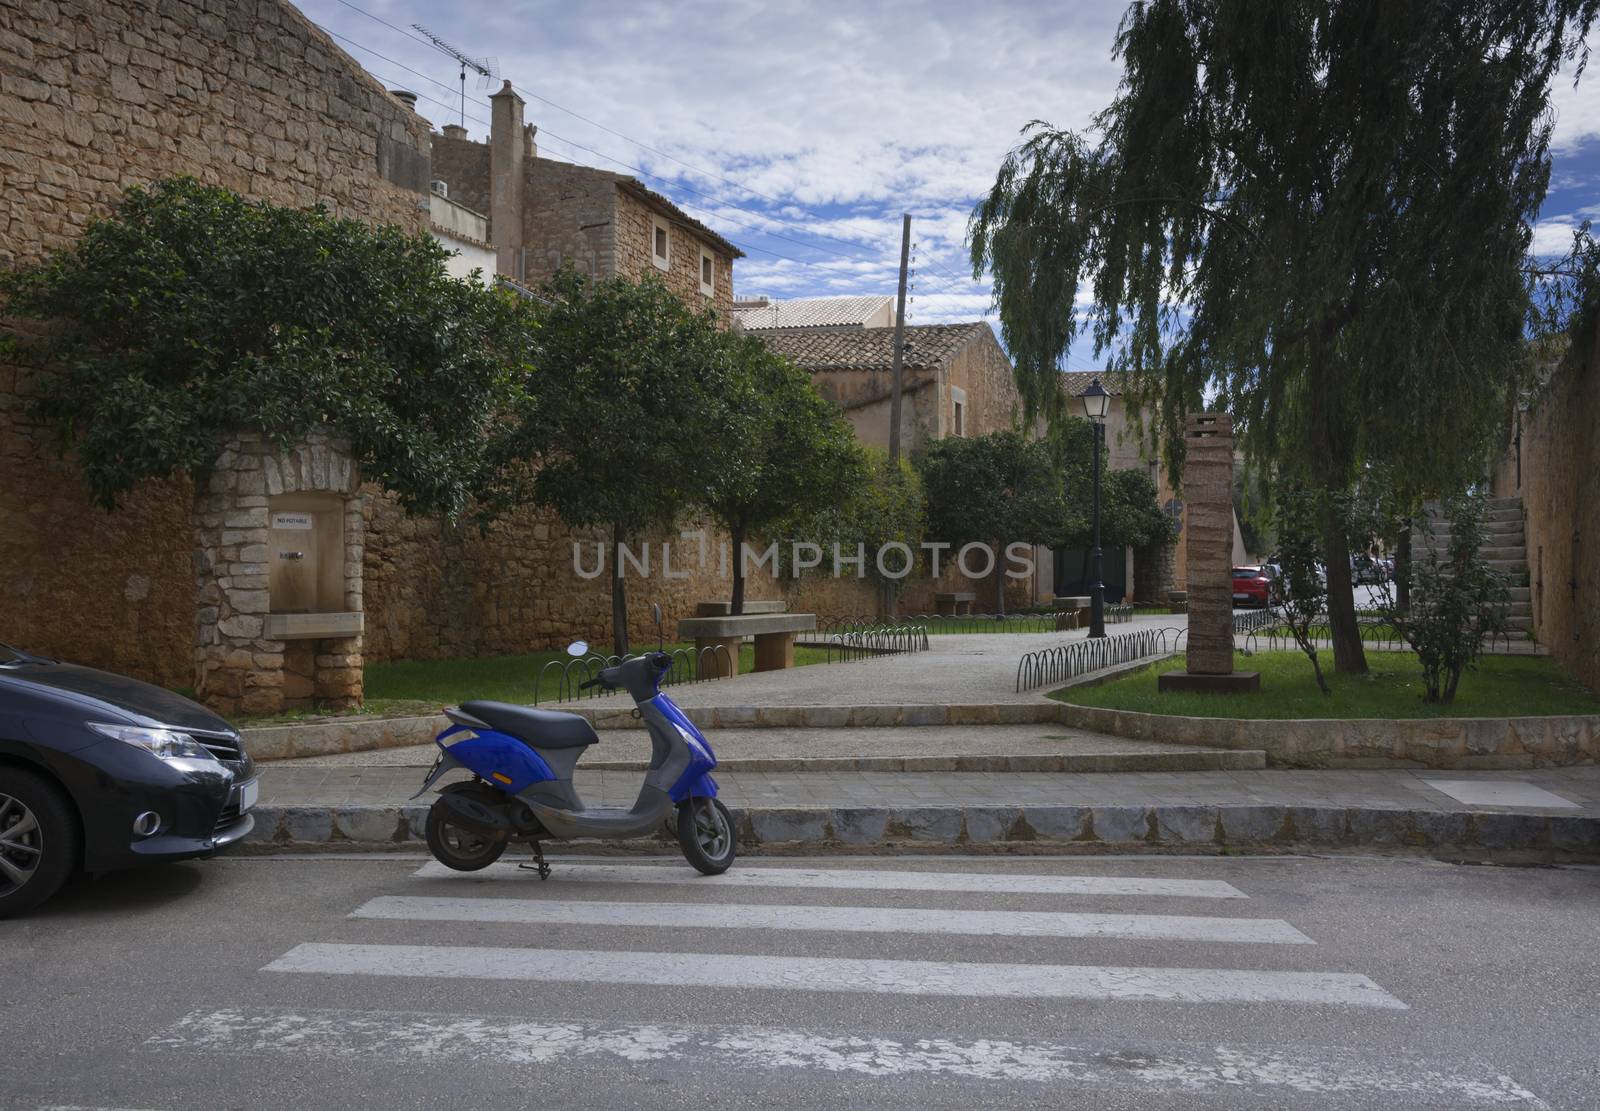 Blue scooter on pedestrian crossing in Mallorca, Balearic islands, Spain.